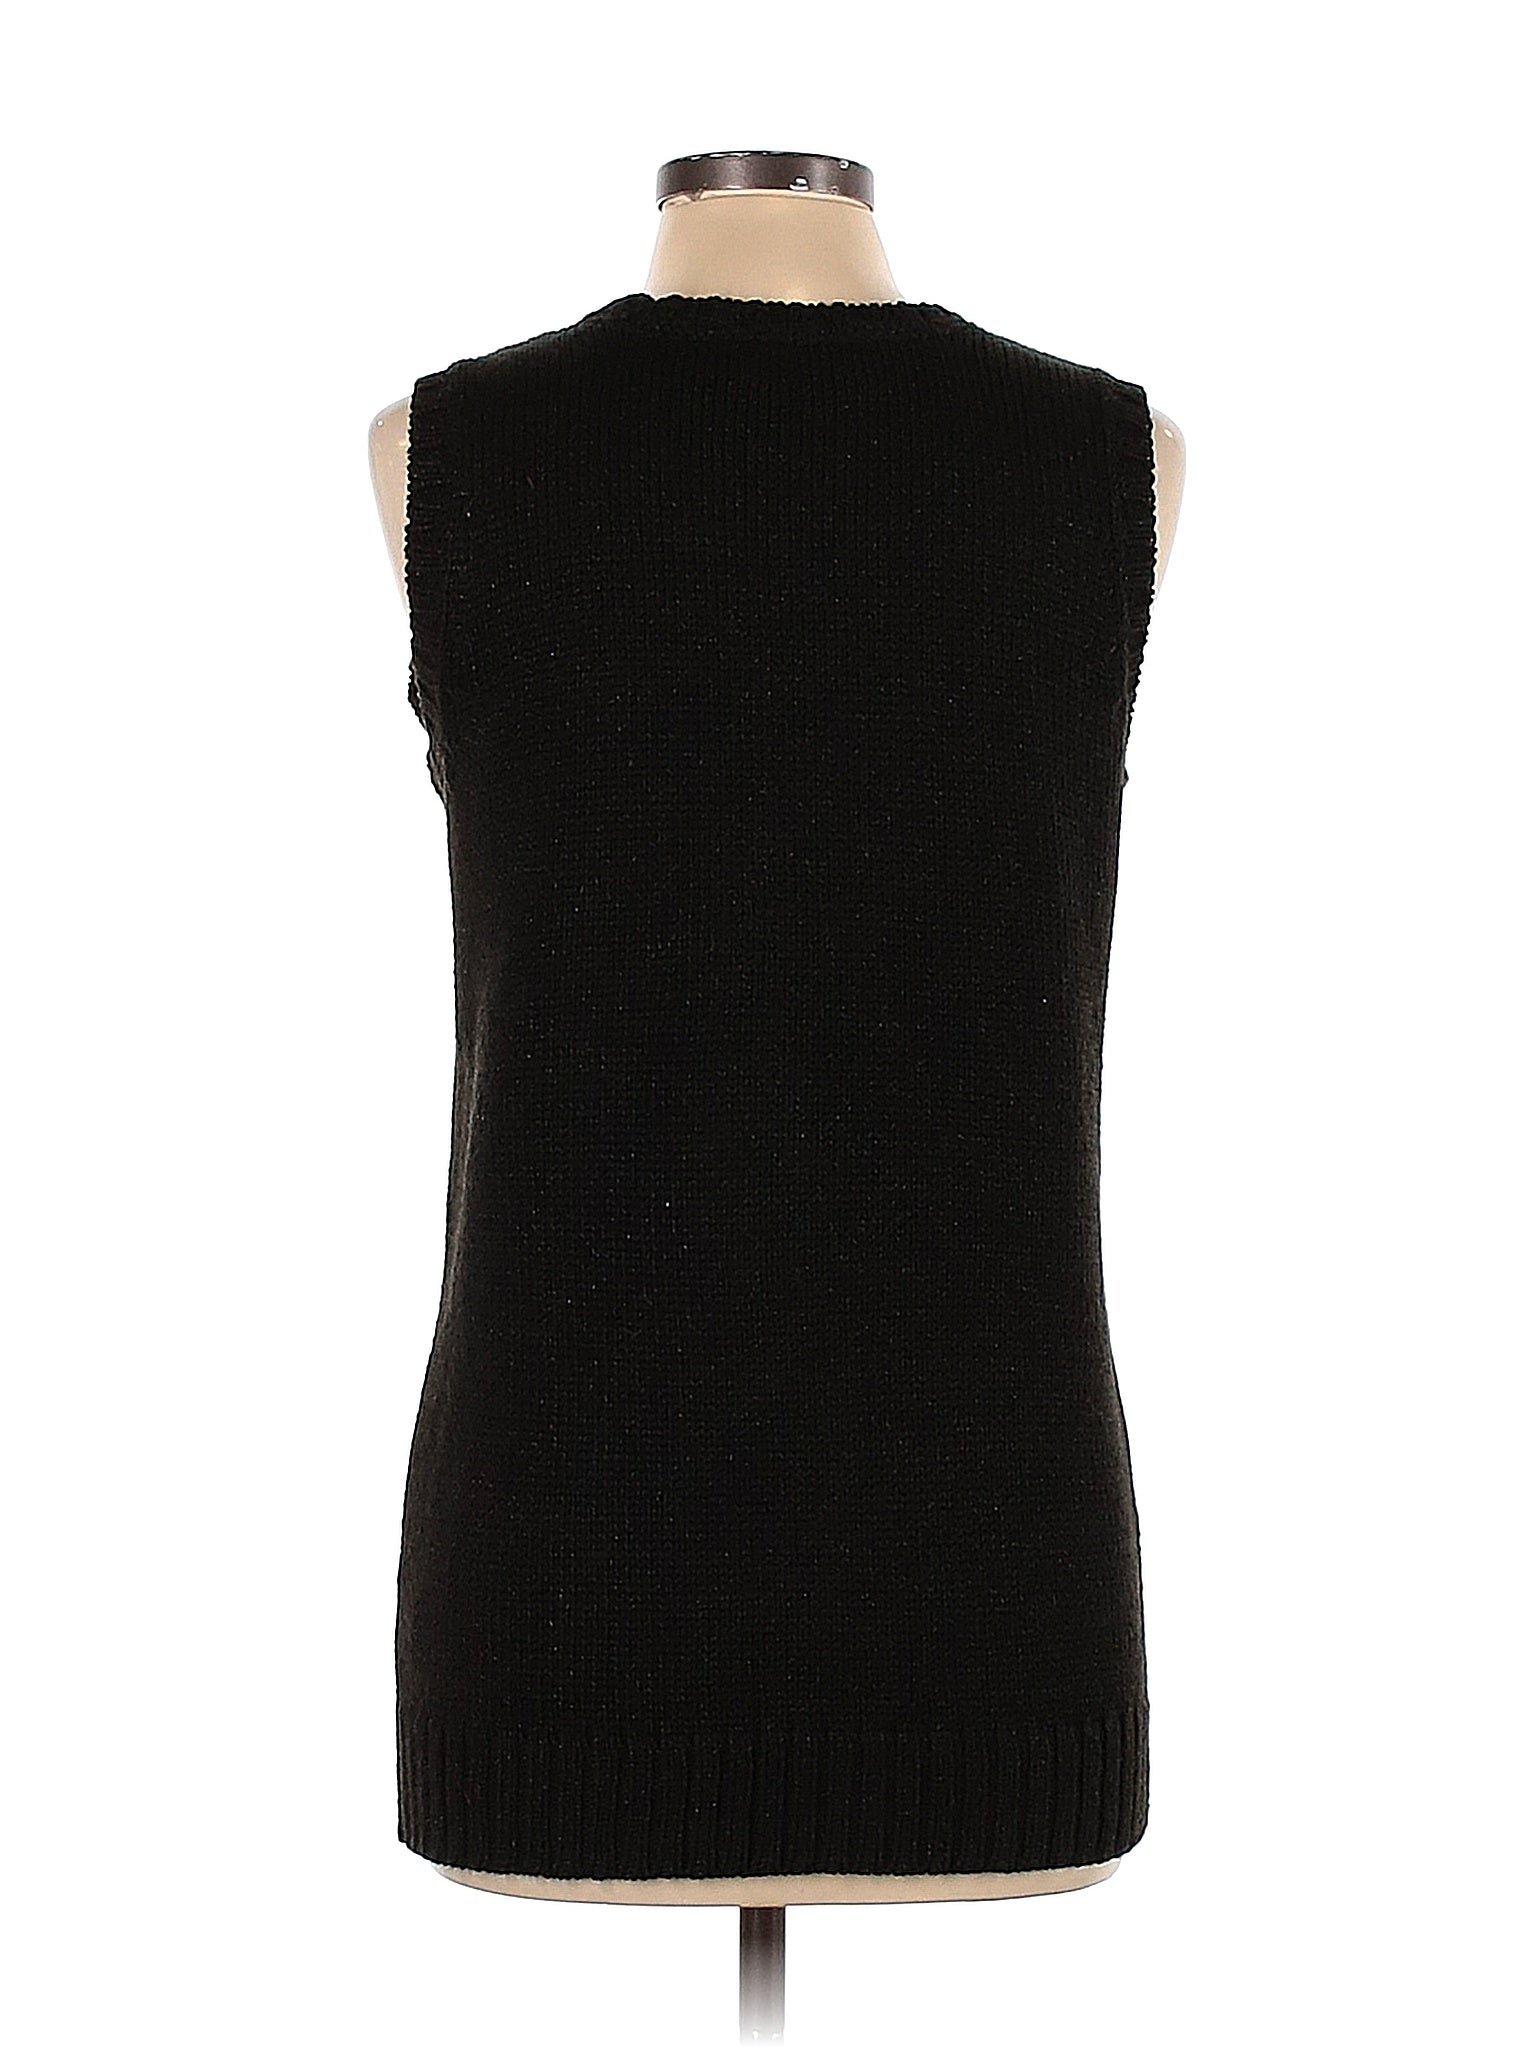 Casual Dress size - Lg (2)